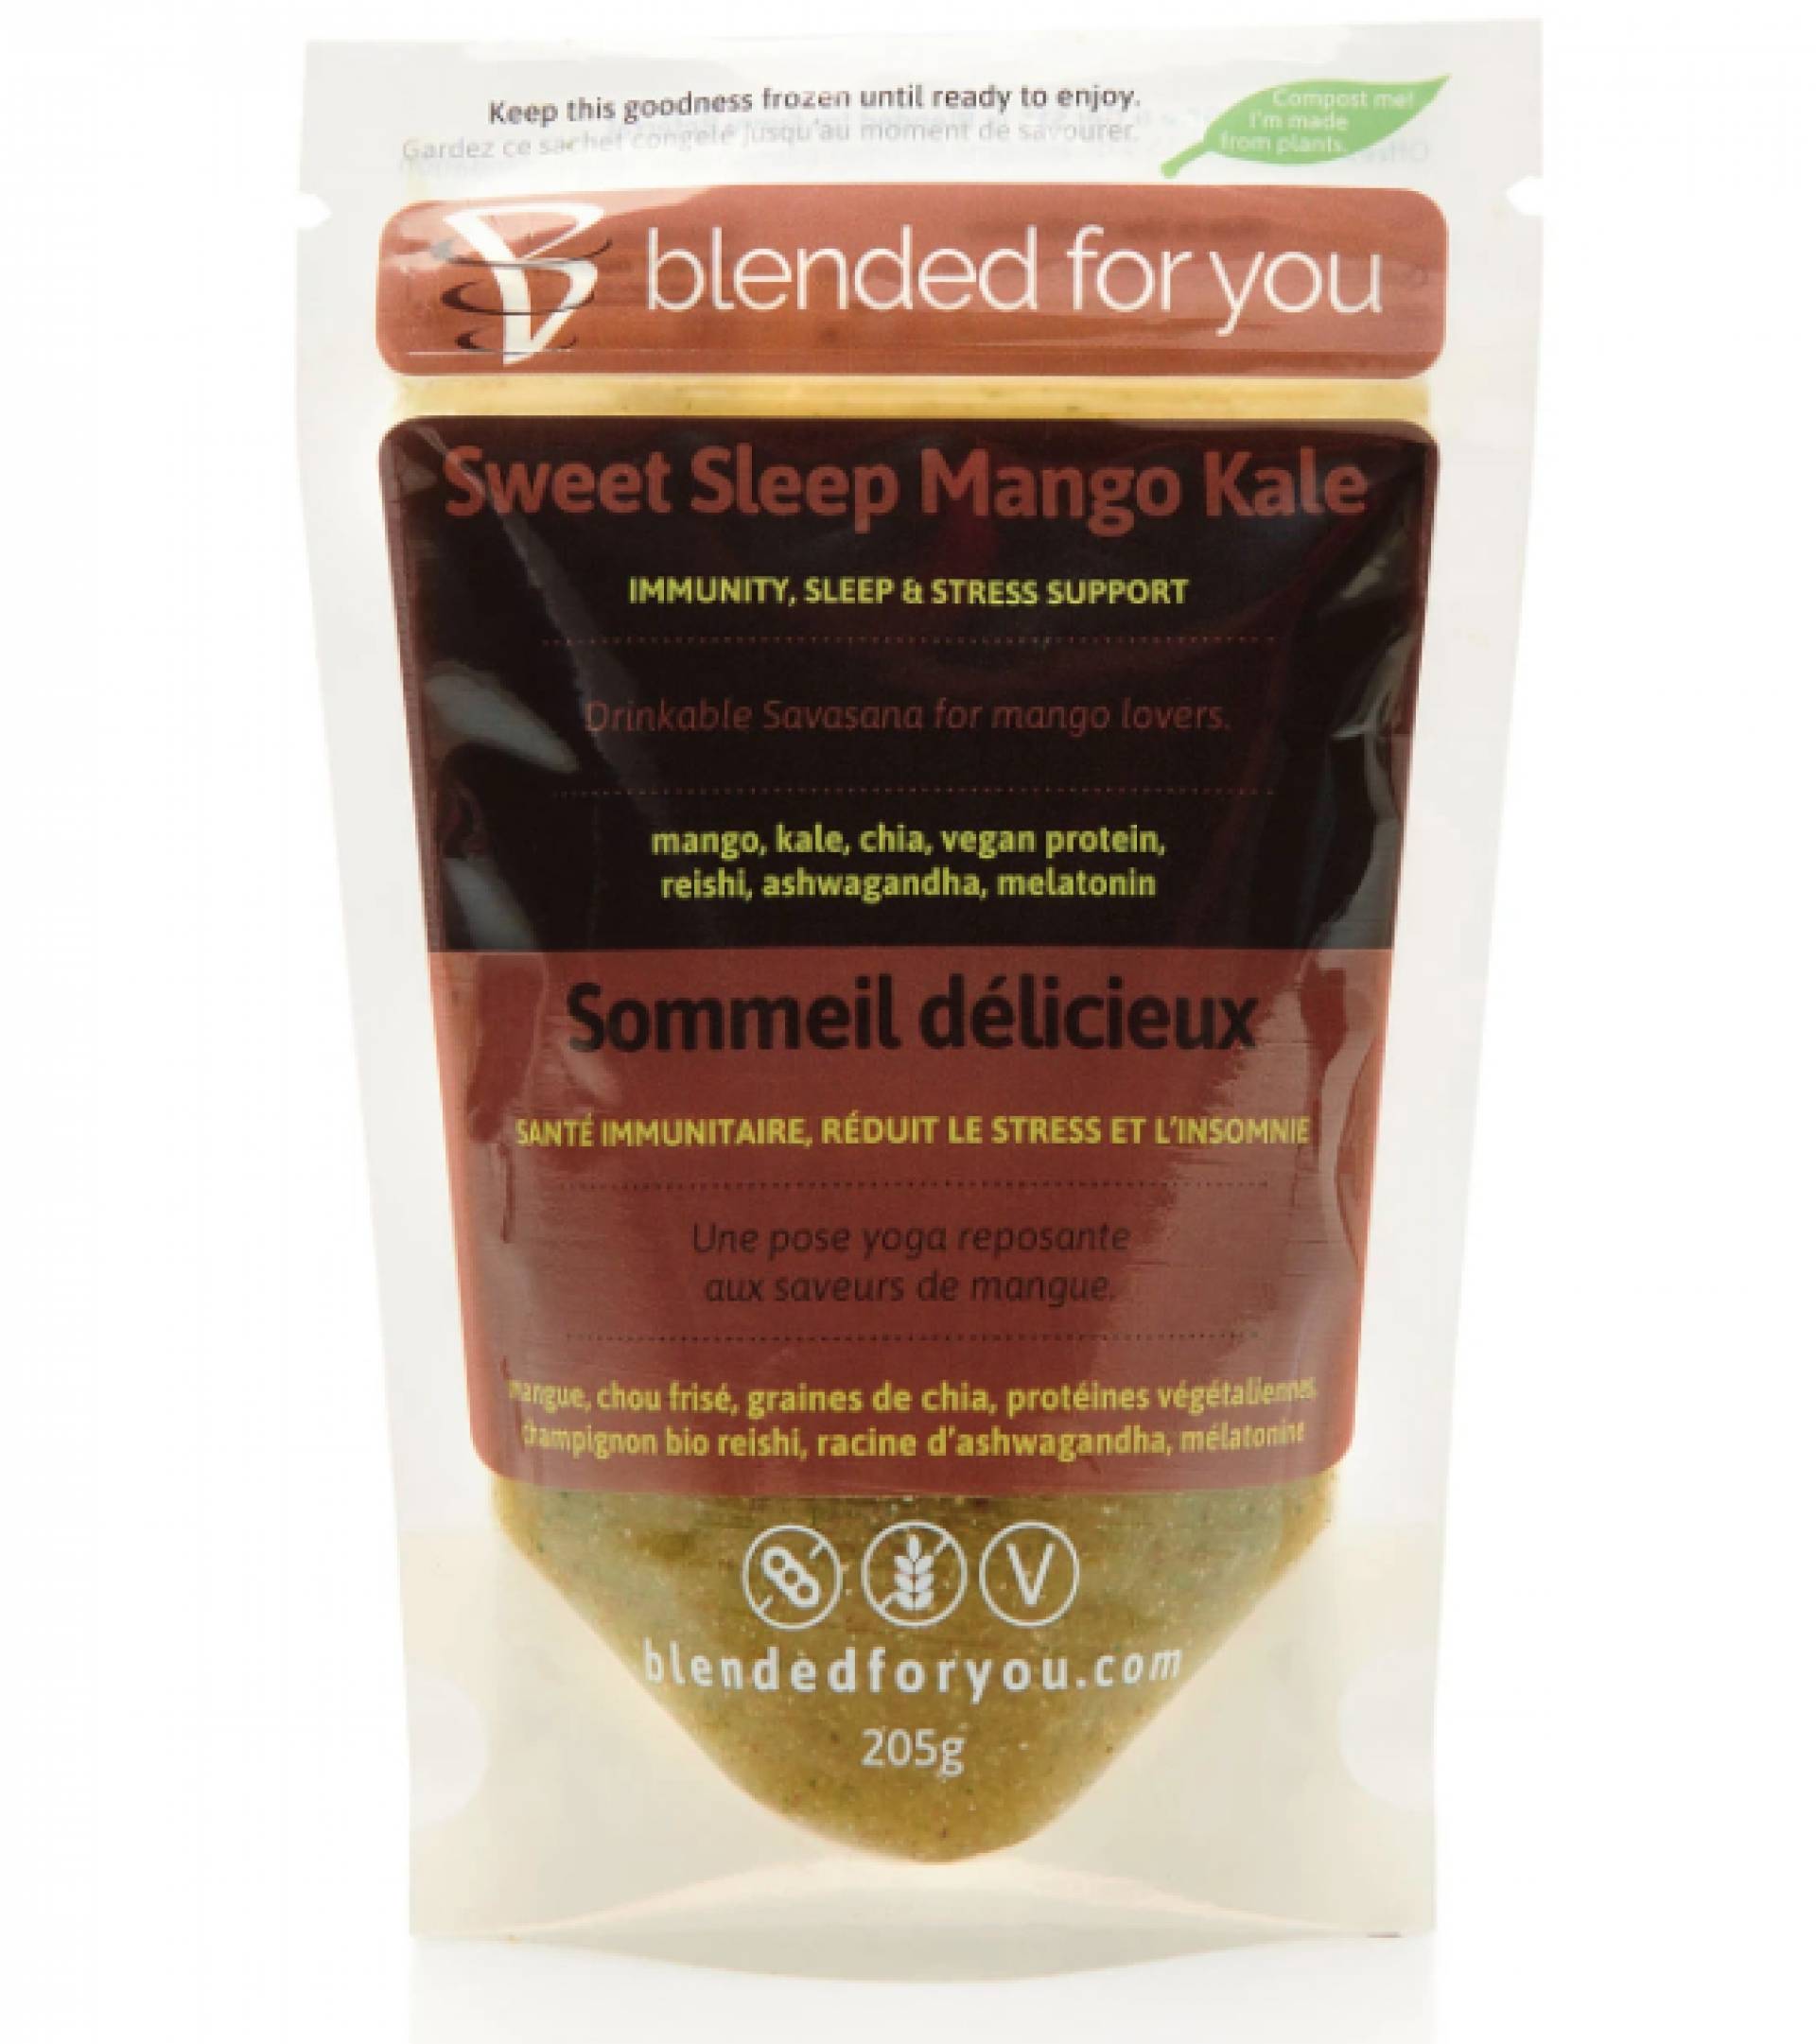 The Sweet Sleep Mango Kale Smoothie